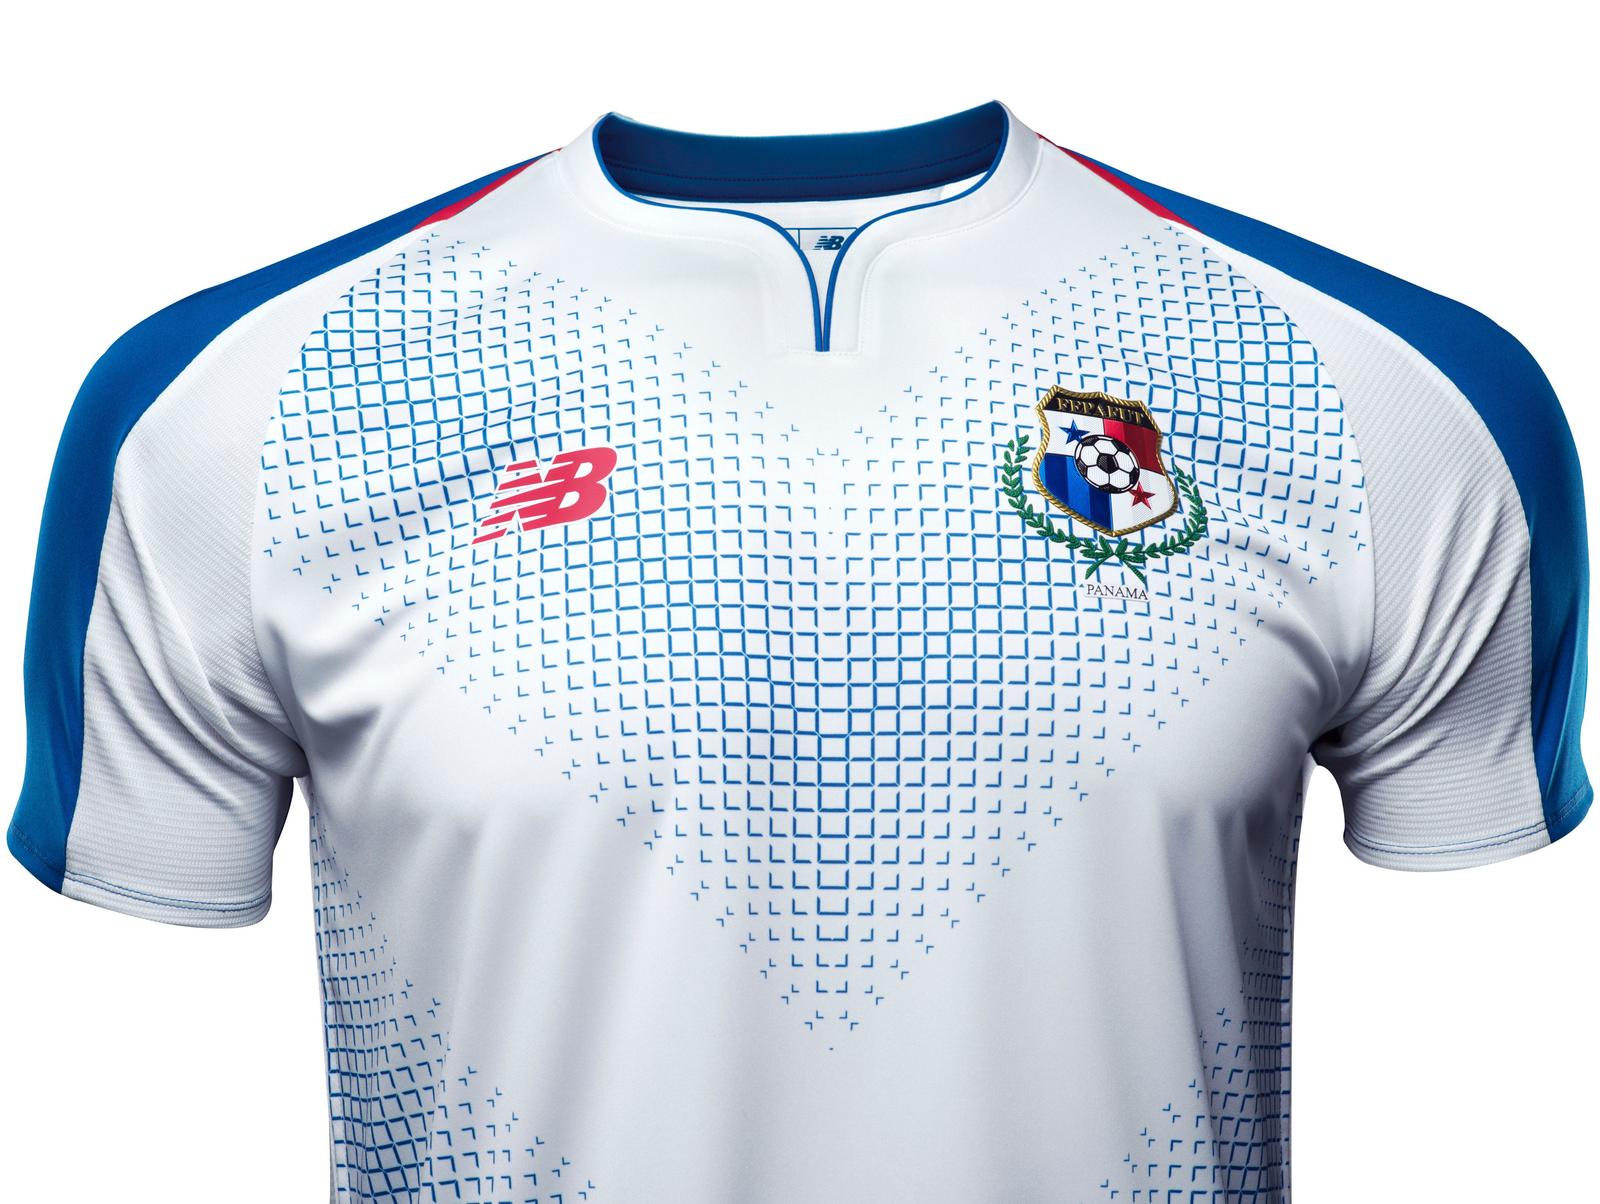 Panama 2018 World Cup Home & Away Kits Released - Footy Headlines